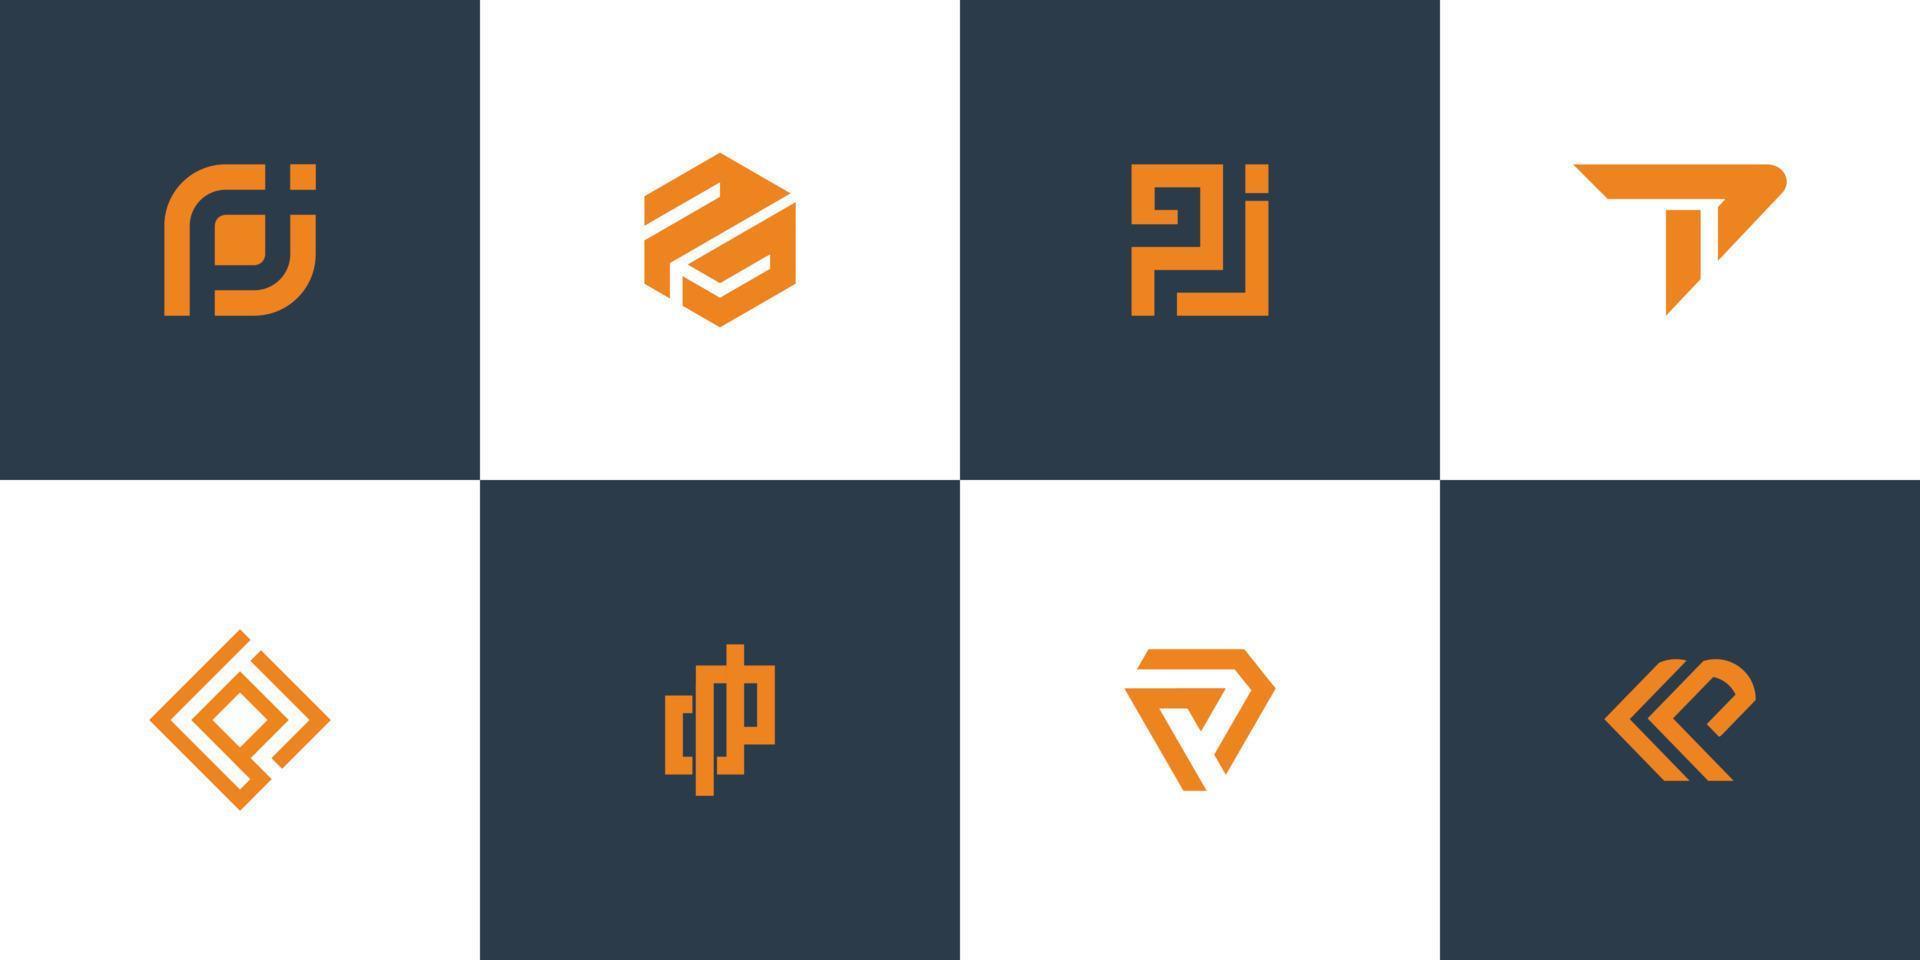 PJ letter logo design on luxury background. JP monogram initials letter logo concept. PJ icon design. JP elegant and Professional vector